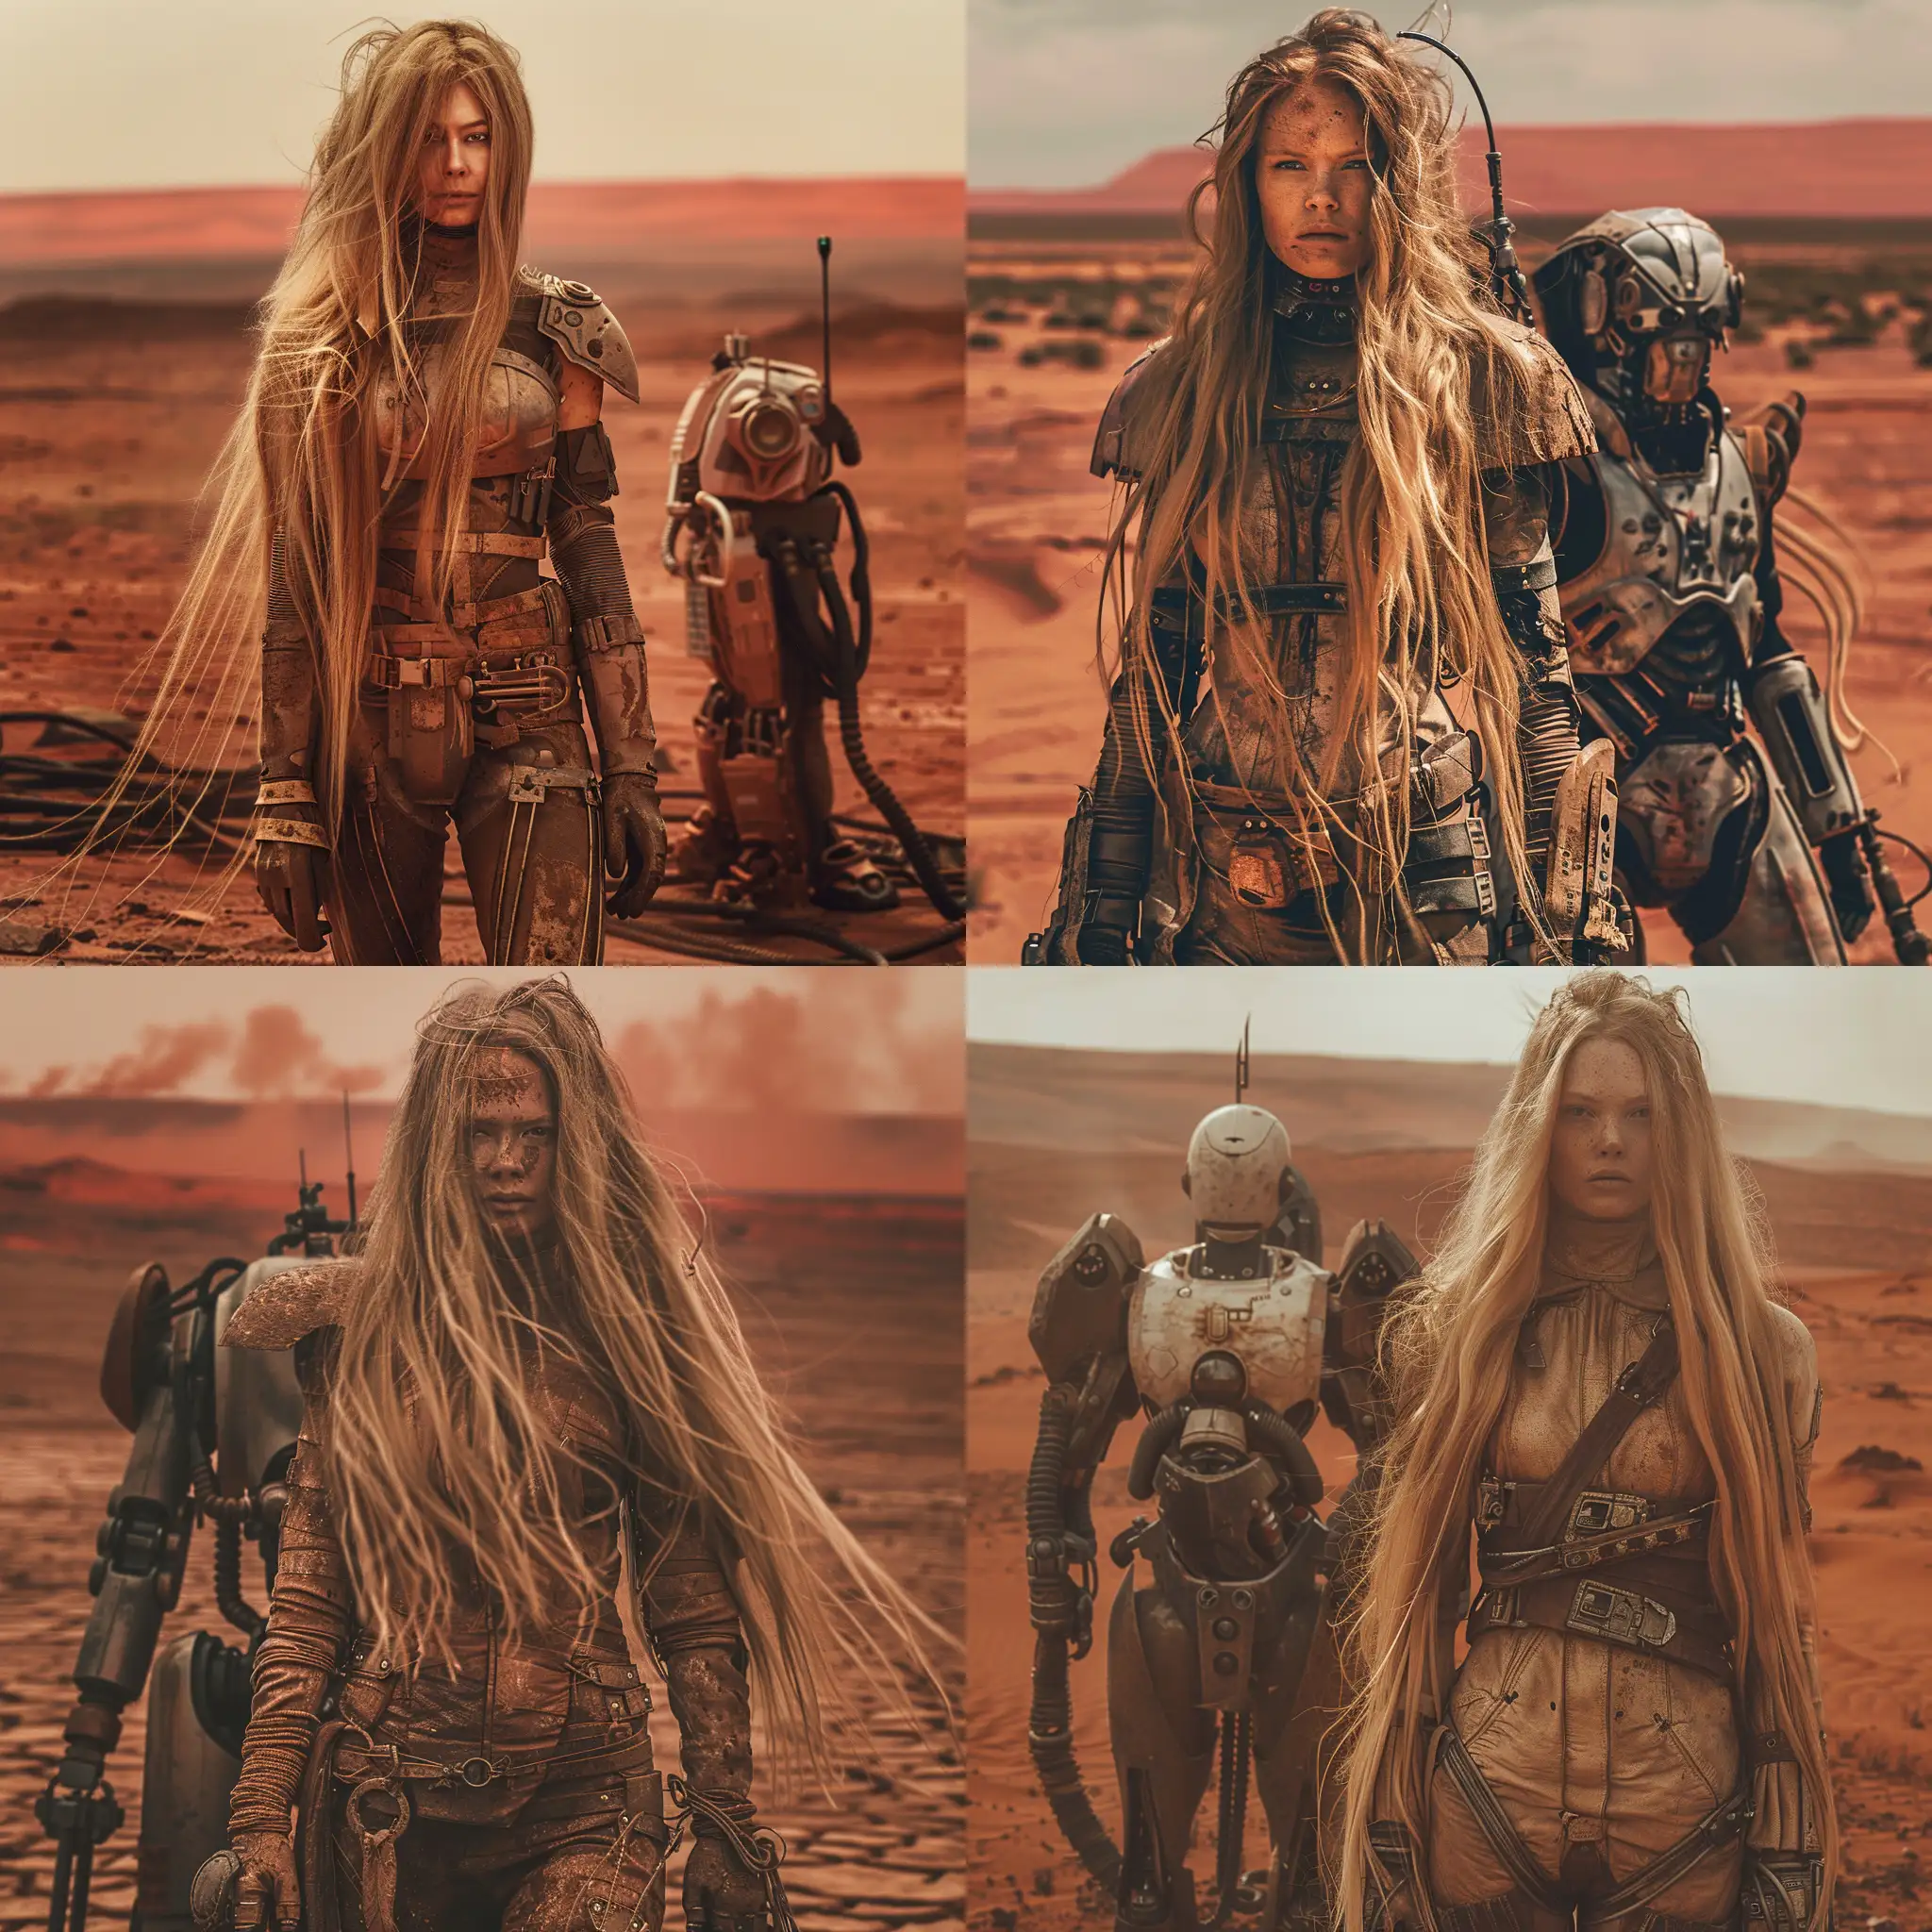 Futuristic-PostApocalyptic-Woman-in-Dramatic-Desert